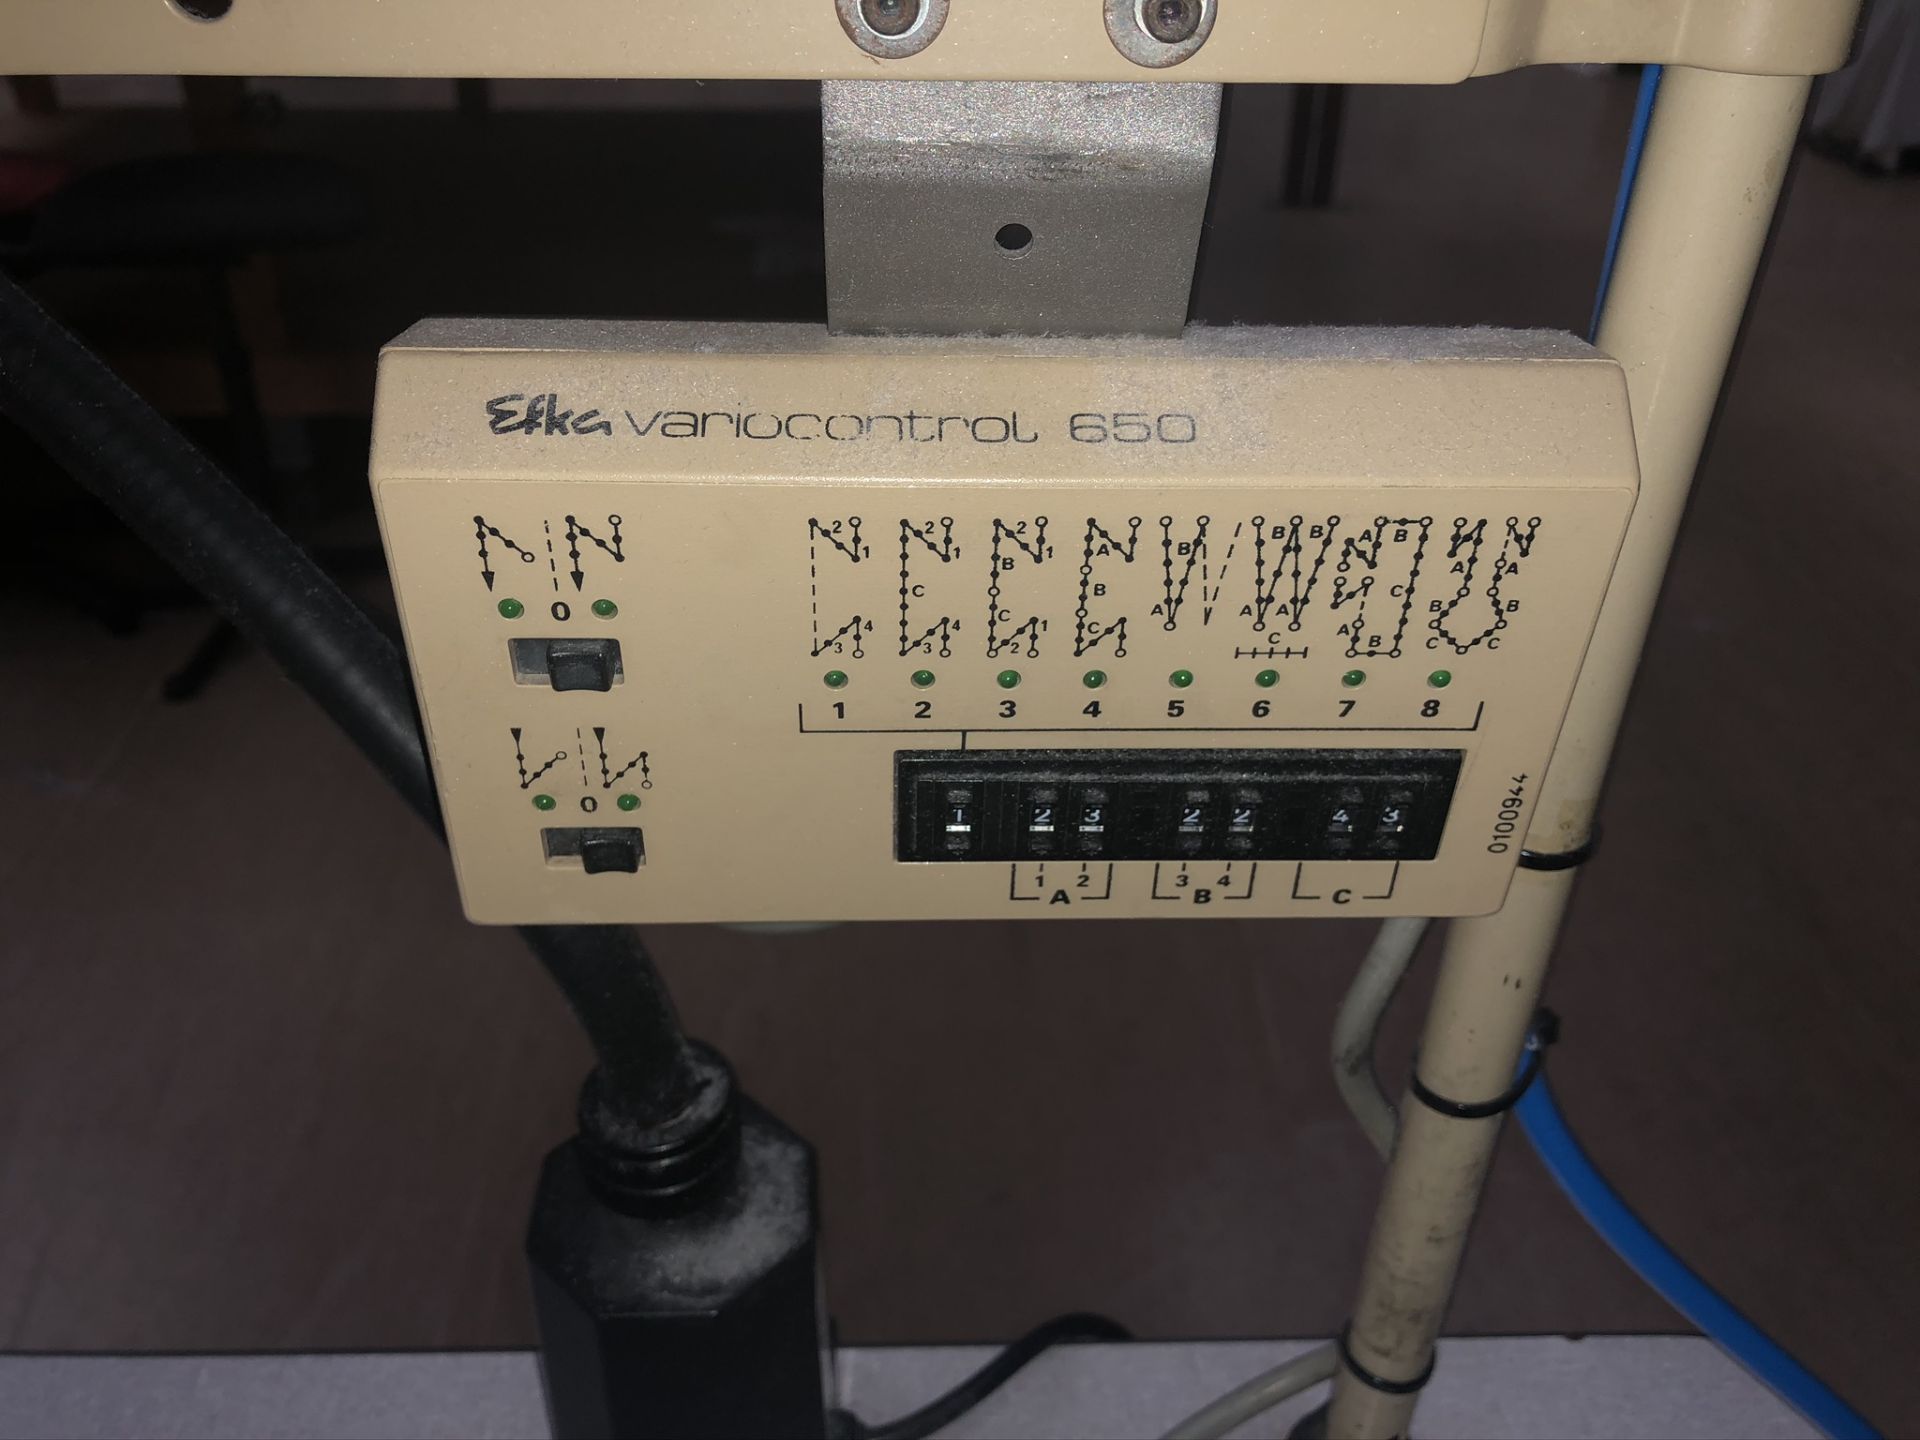 PFAFF KI-481 lockstitch sewing machine w/ Efke variocontrol - Image 3 of 6